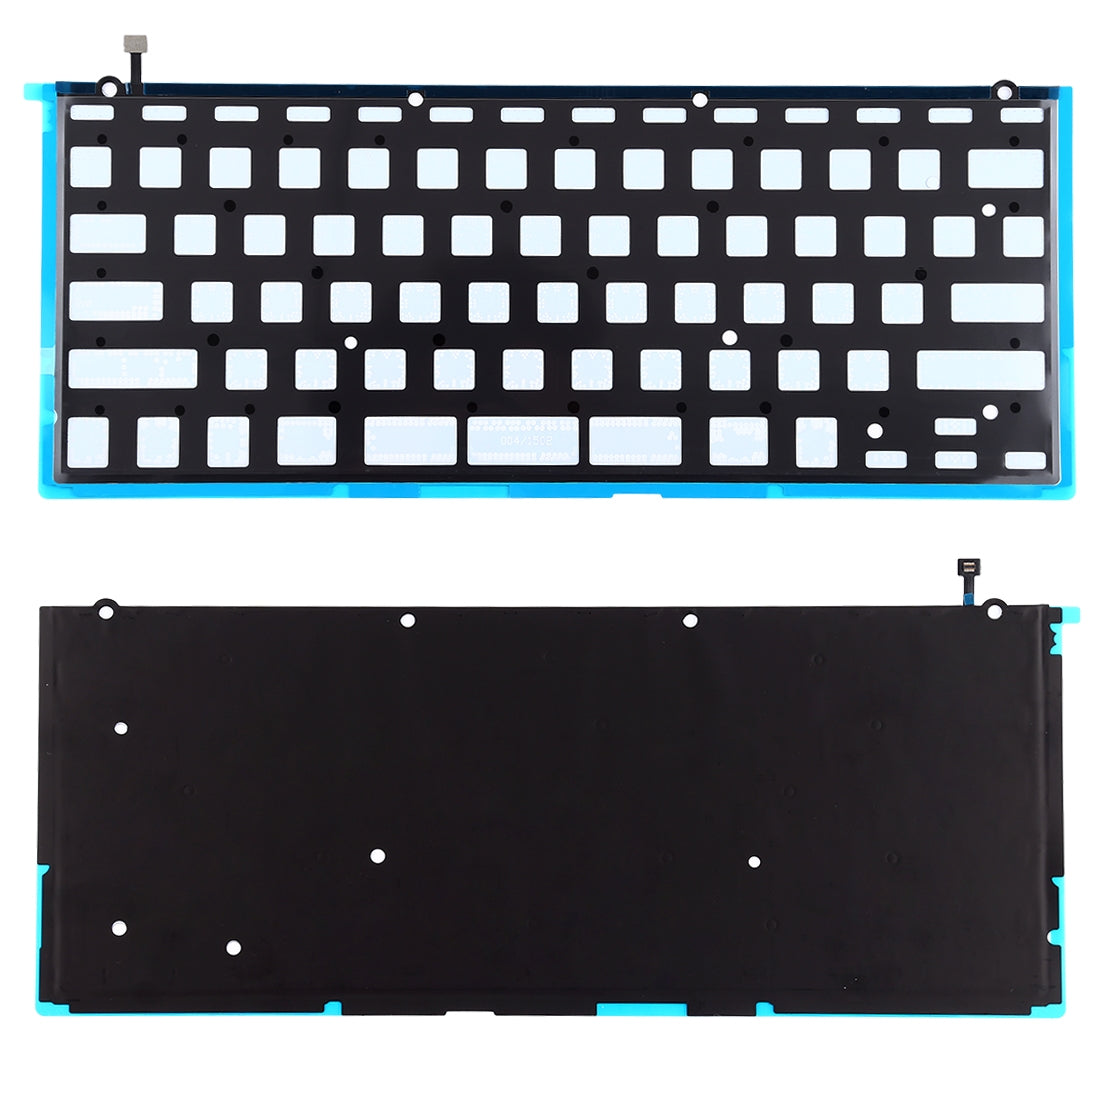 Backlight Keyboard US Version without ñ Apple MacBook Pro Retina 13 A1502